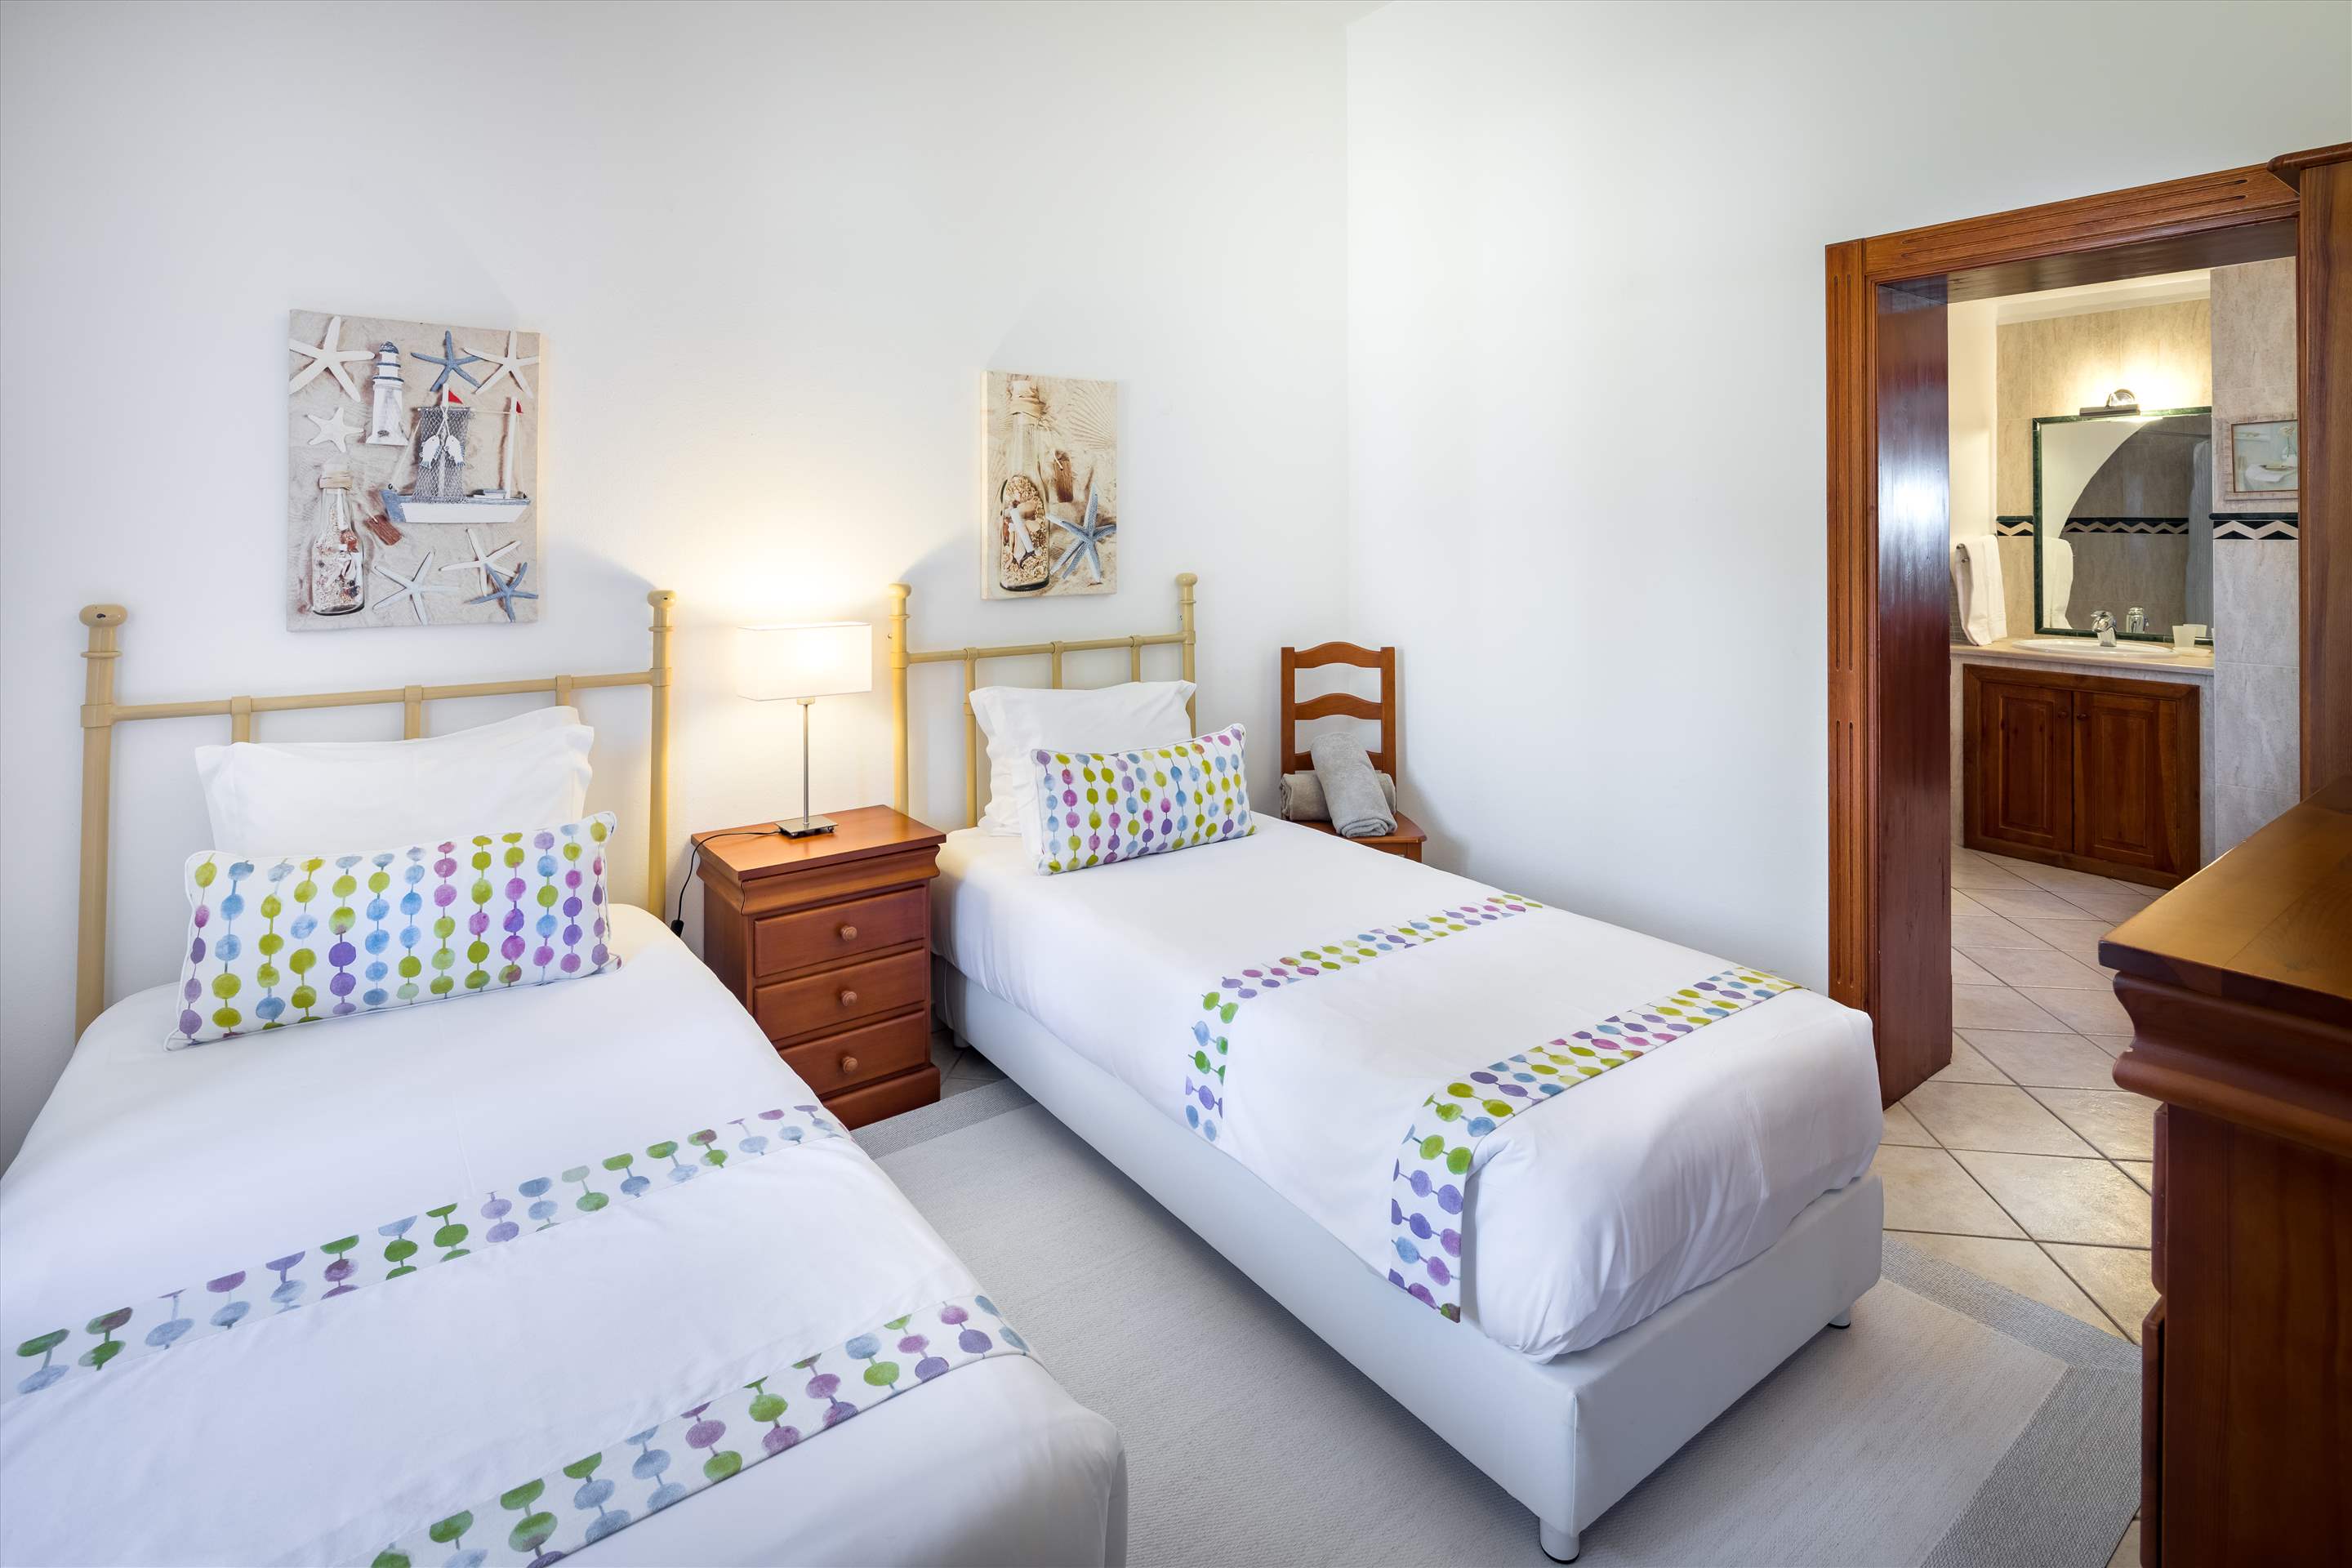 Casa do Ingles, up to 6 persons, 3 bedroom villa in Vilamoura Area, Algarve Photo #17